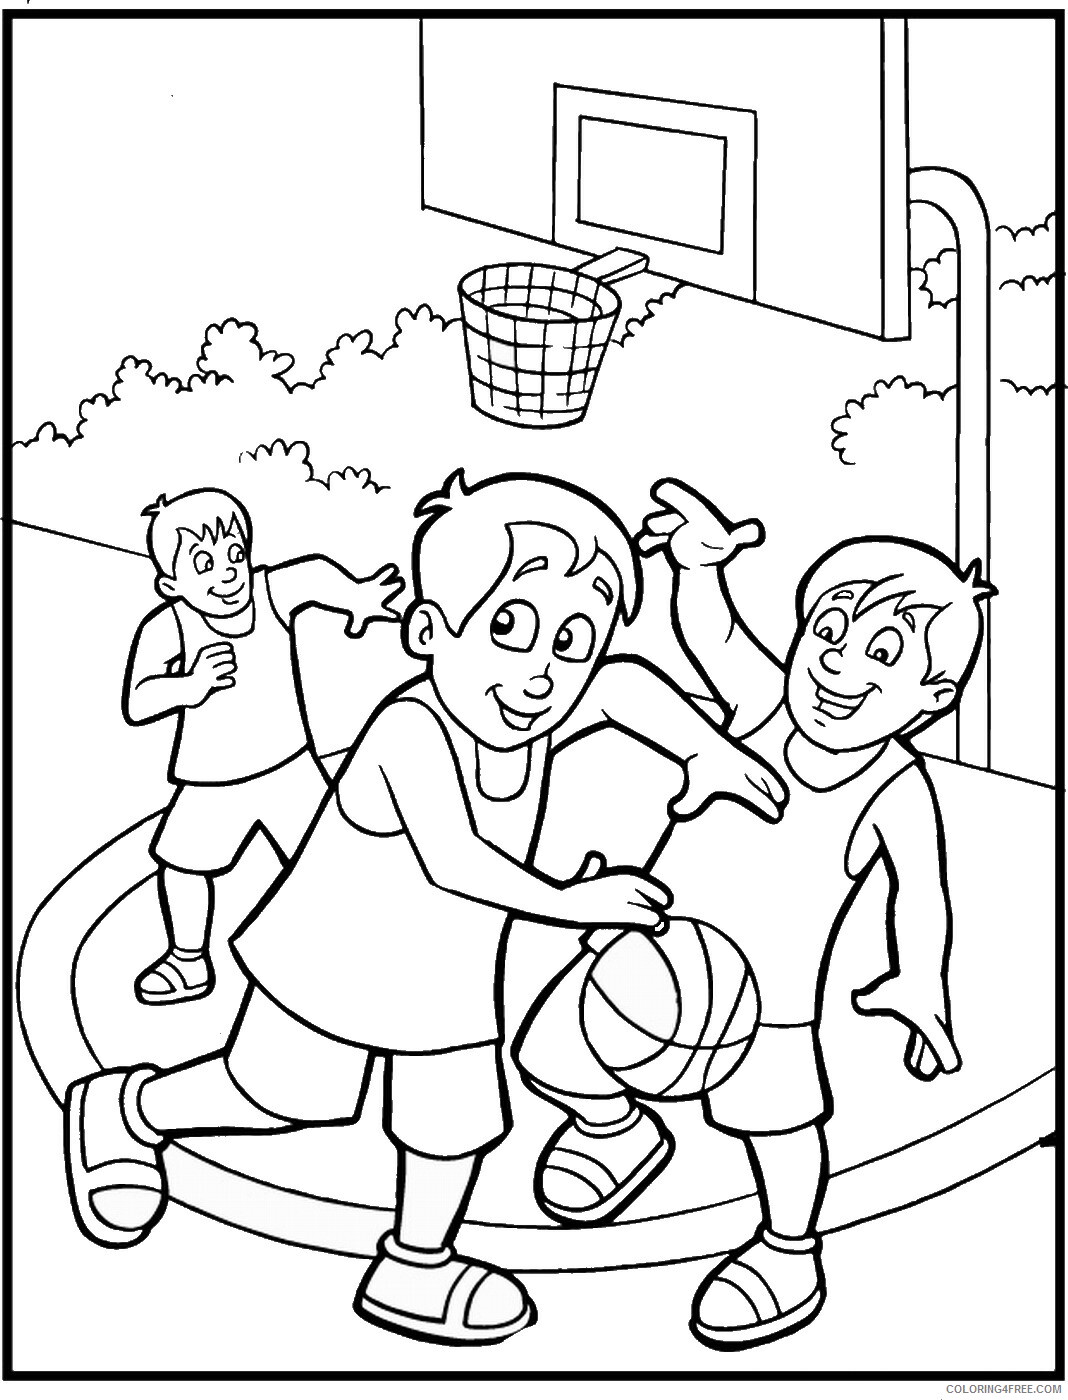 Basketball Coloring Pages basketballc48 Printable 2021 0785 Coloring4free